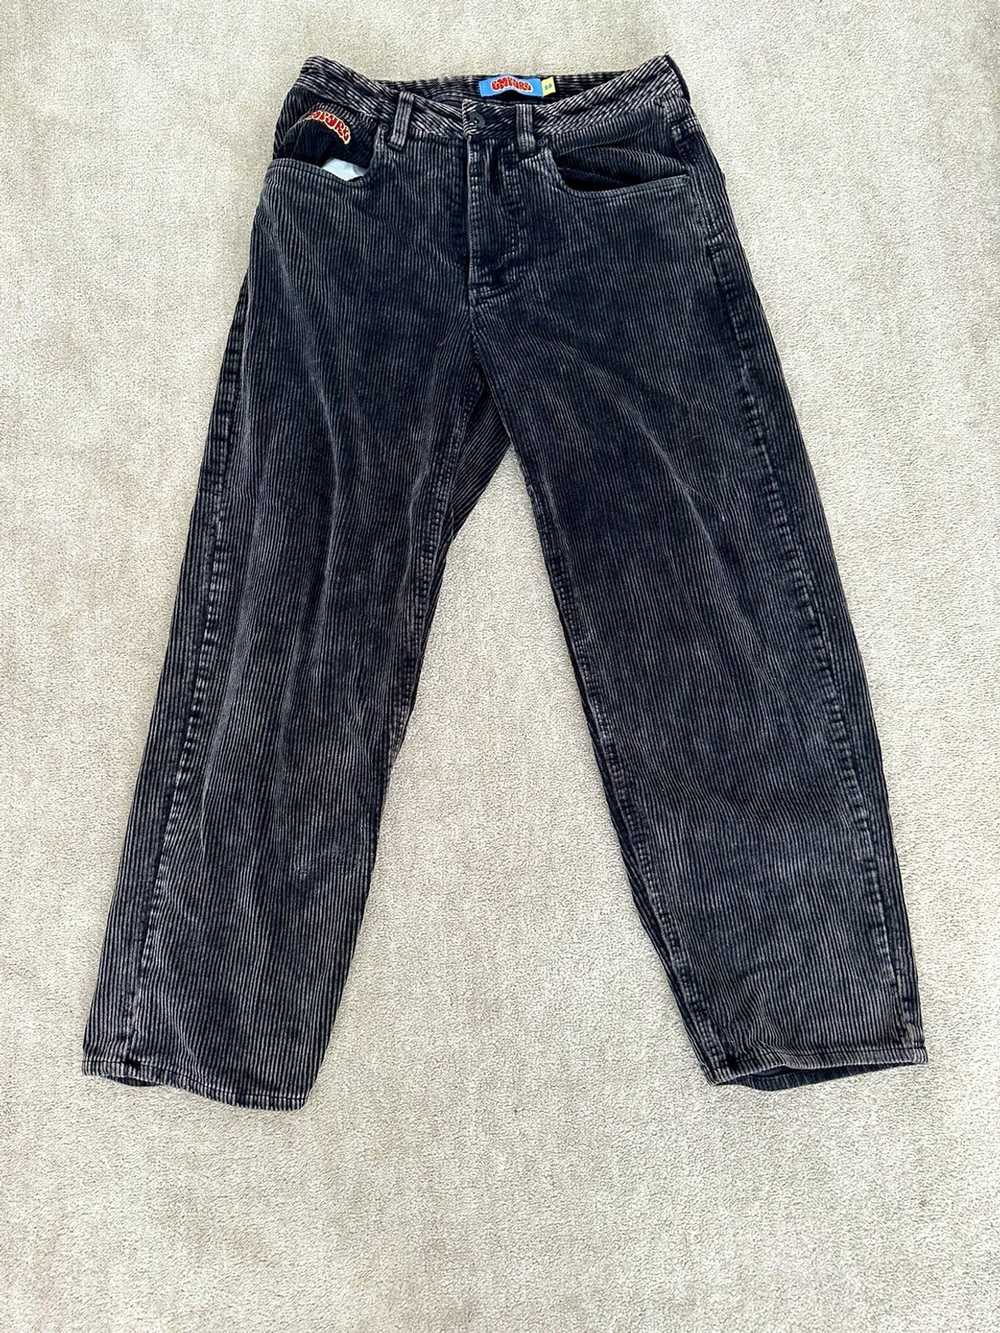 Empyre × Zumiez Washed black Corduroy pants - image 1